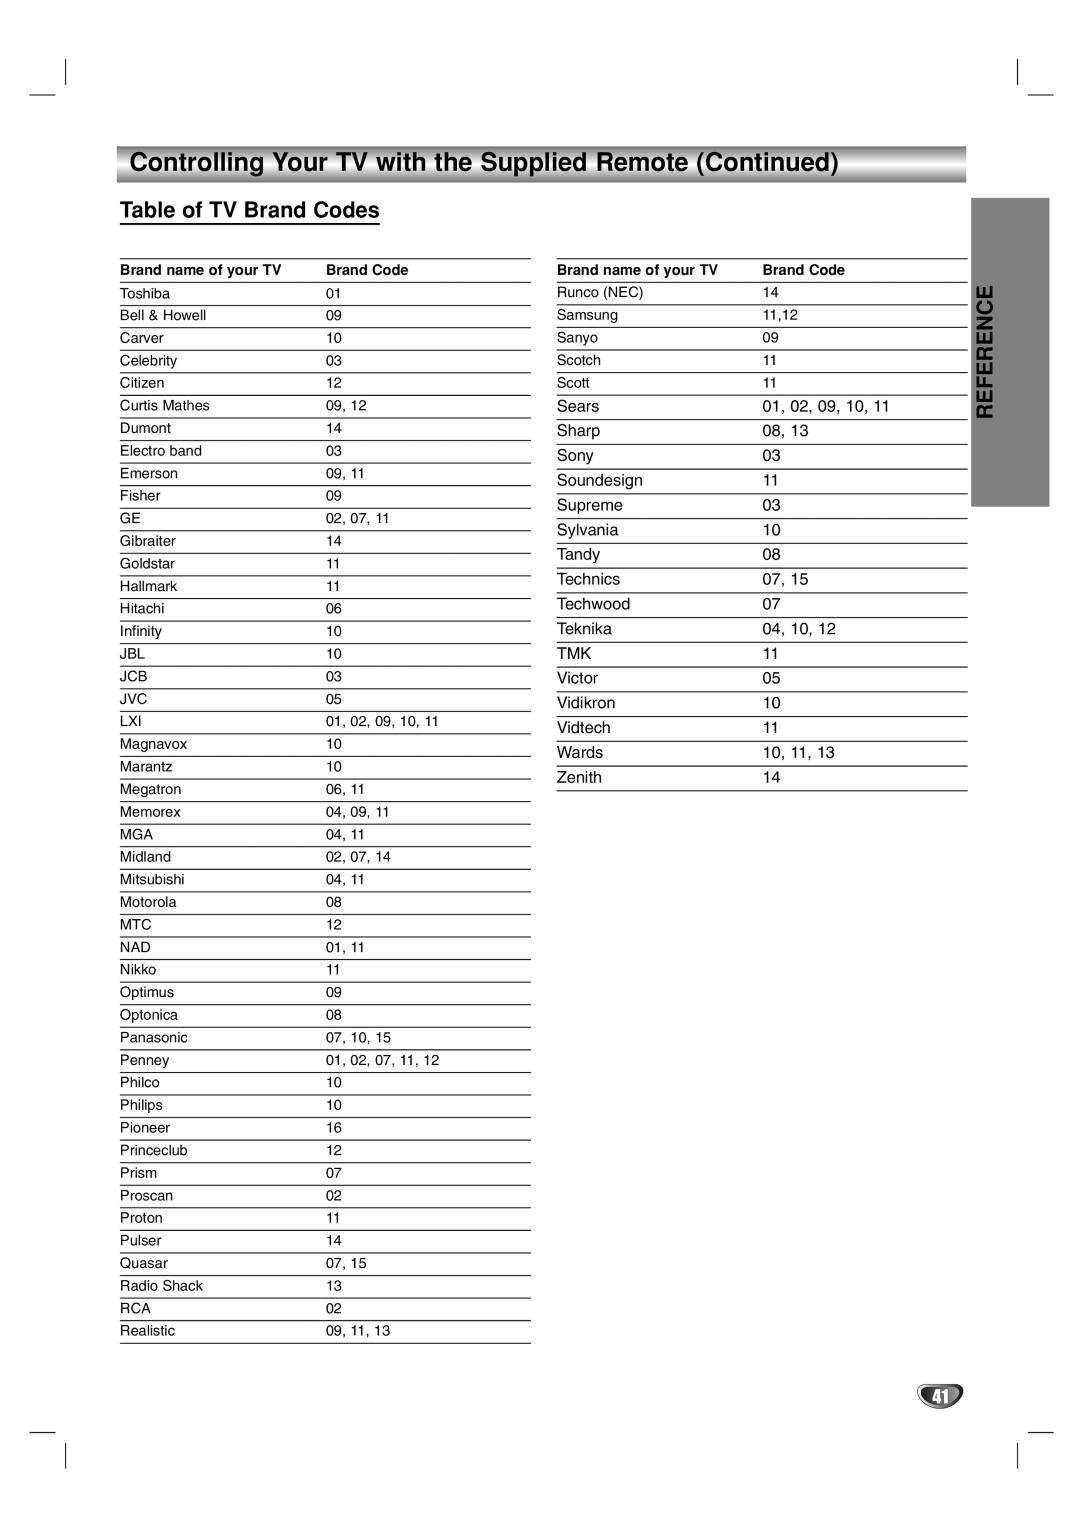 Toshiba SD-V57HTSU owner manual Table of TV Brand Codes 